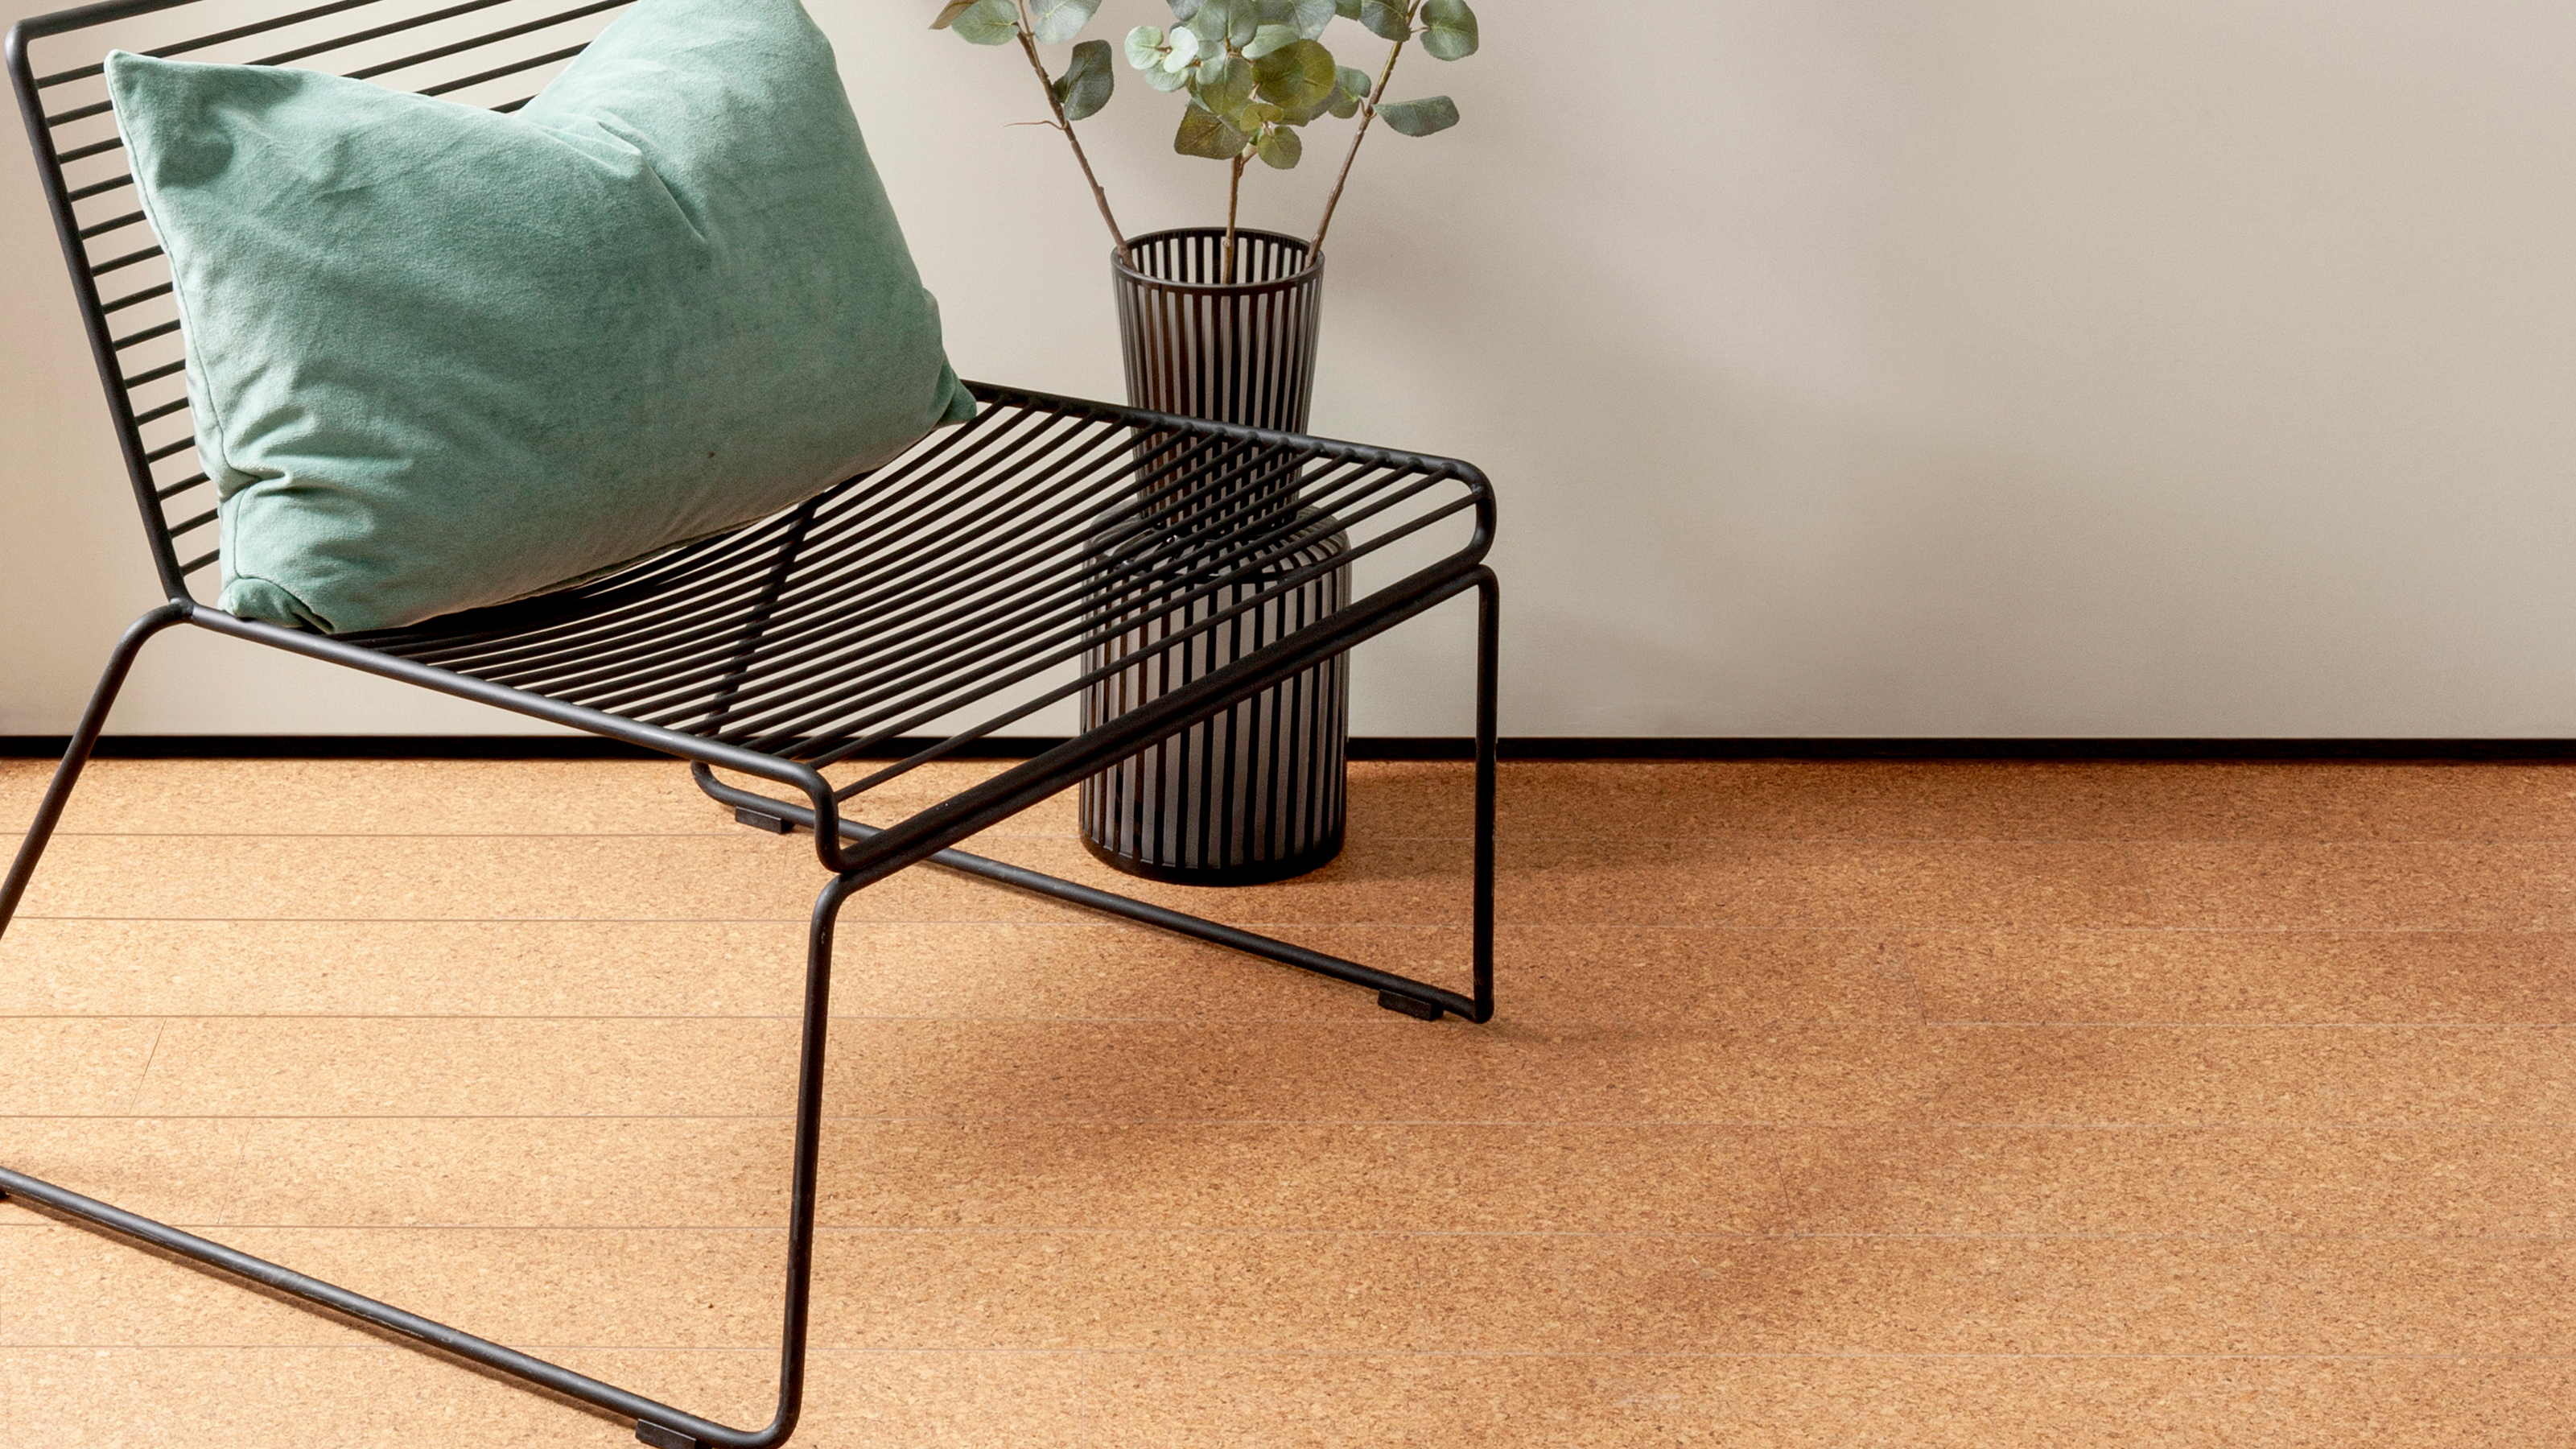 Cork Flooring Australia: Cost, Tiles Options, Cork Floor Pros & Cons